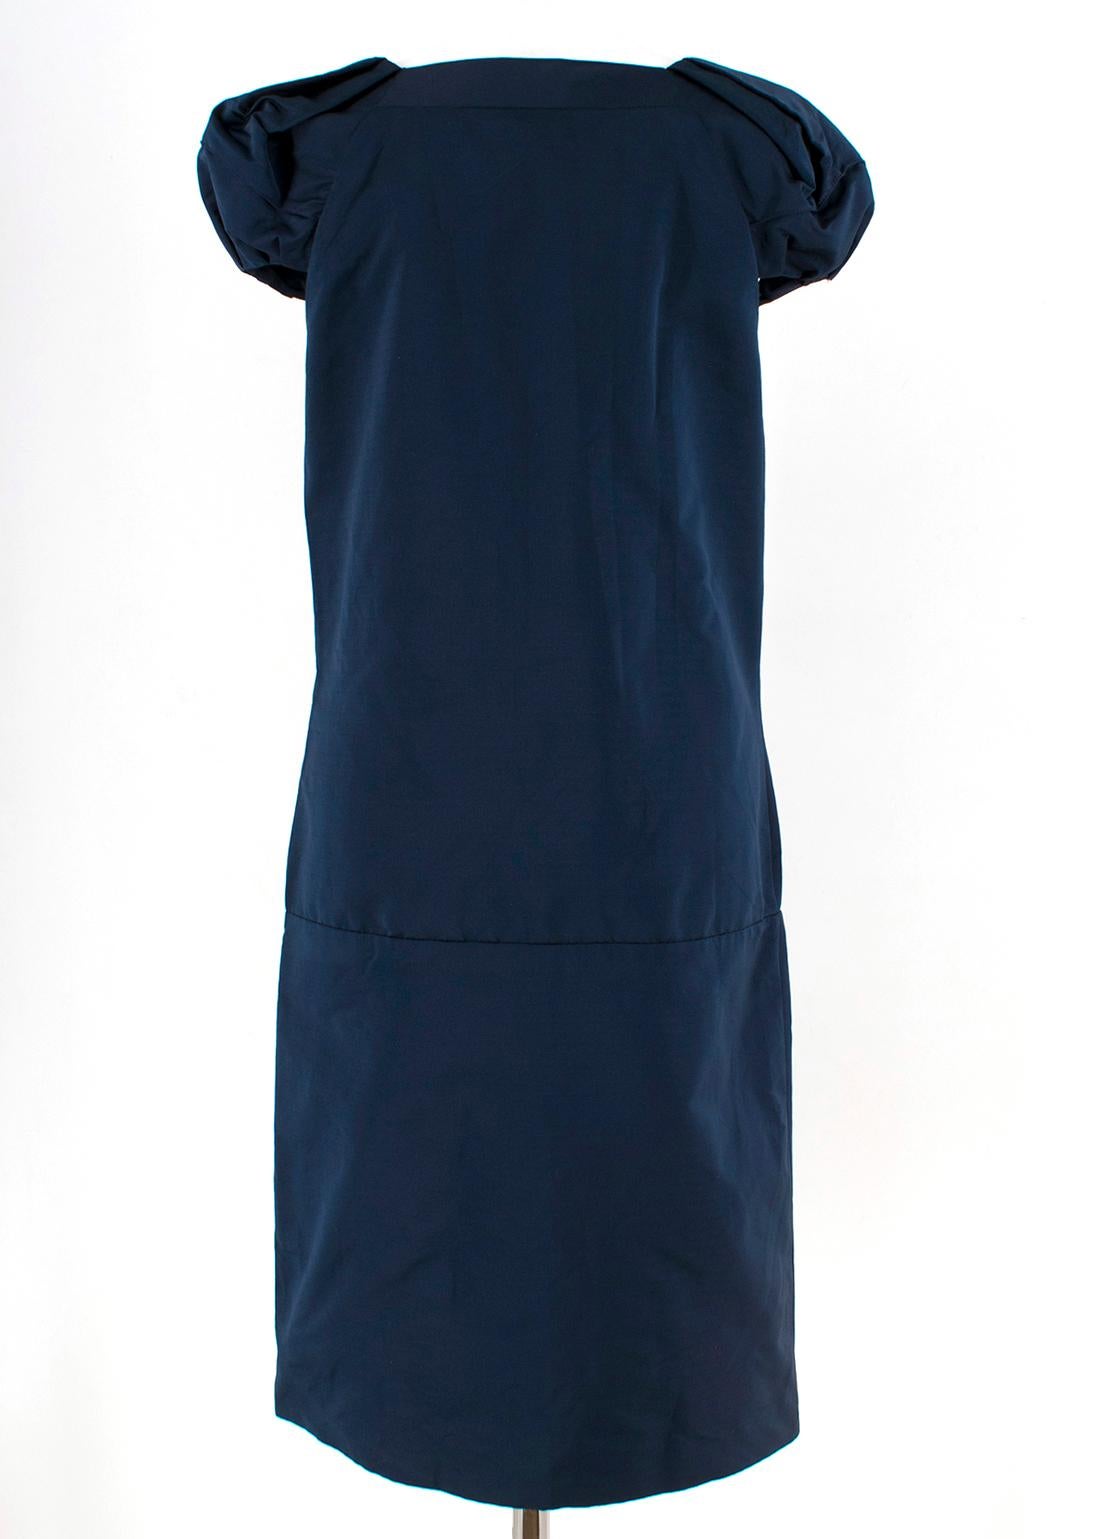 Burberry Prorsum Dark Blue Puff Sleeve Dress - Size Medium For Sale 2